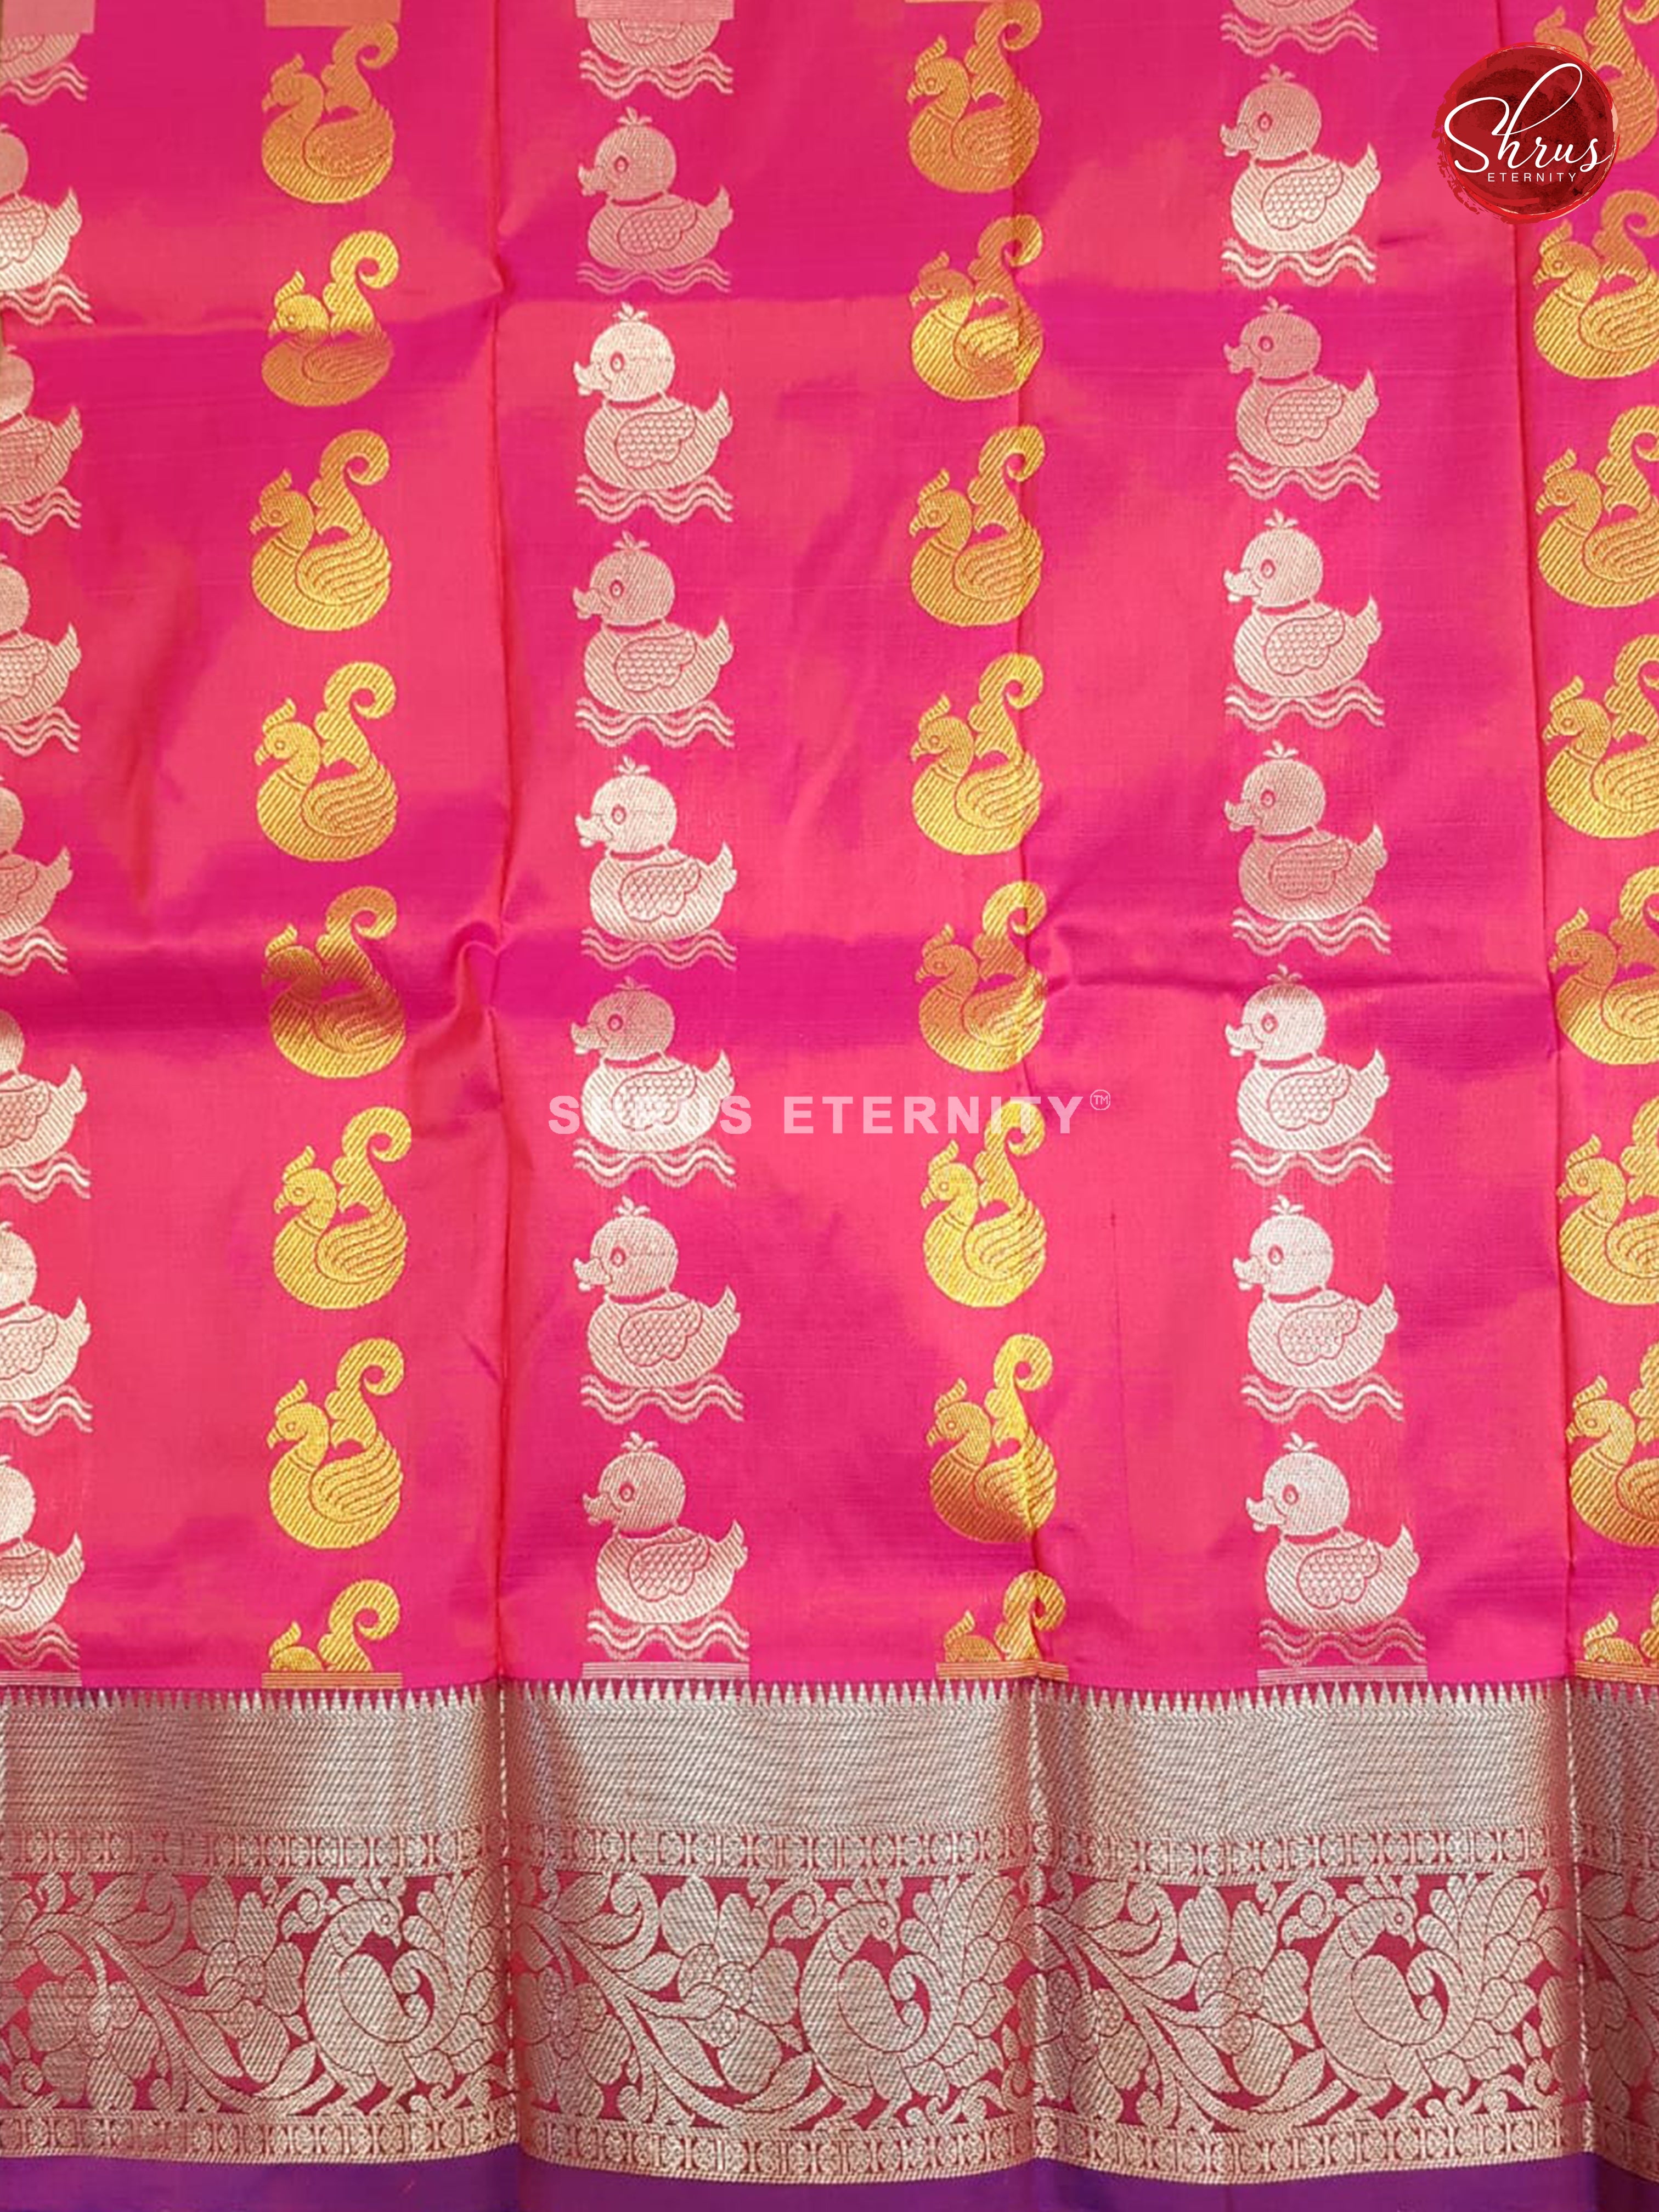 Blue & Pink - Pattu Pavadai  0-2 Years - Shop on ShrusEternity.com